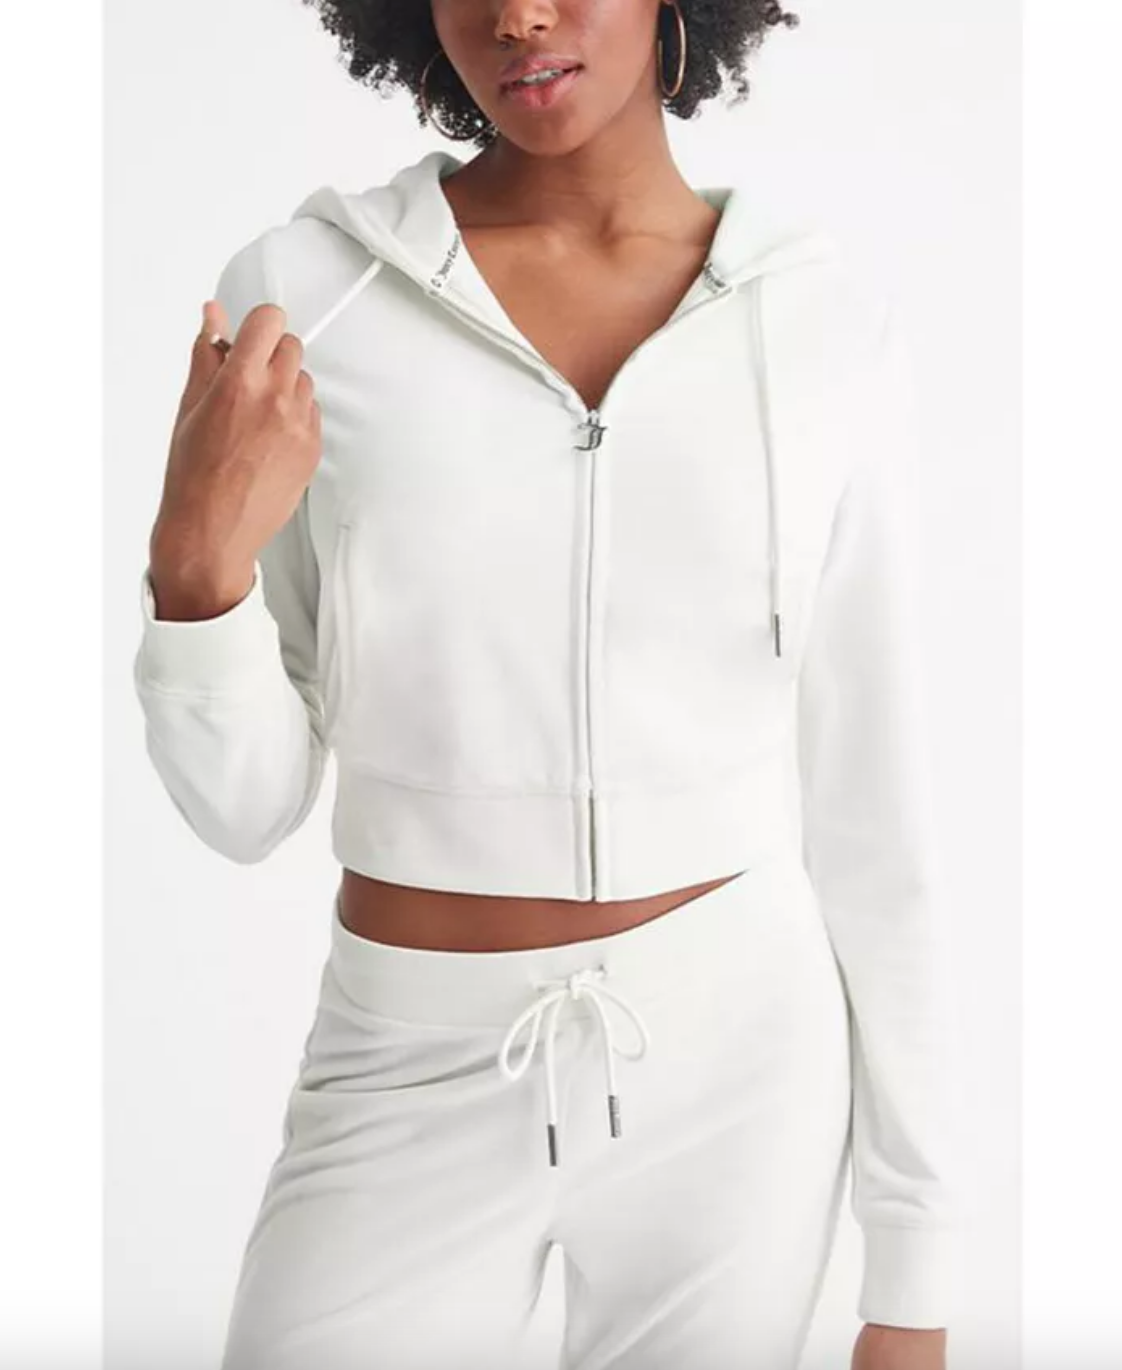 Paige DeSorbo's White Velour Zip Up Sweatshirt